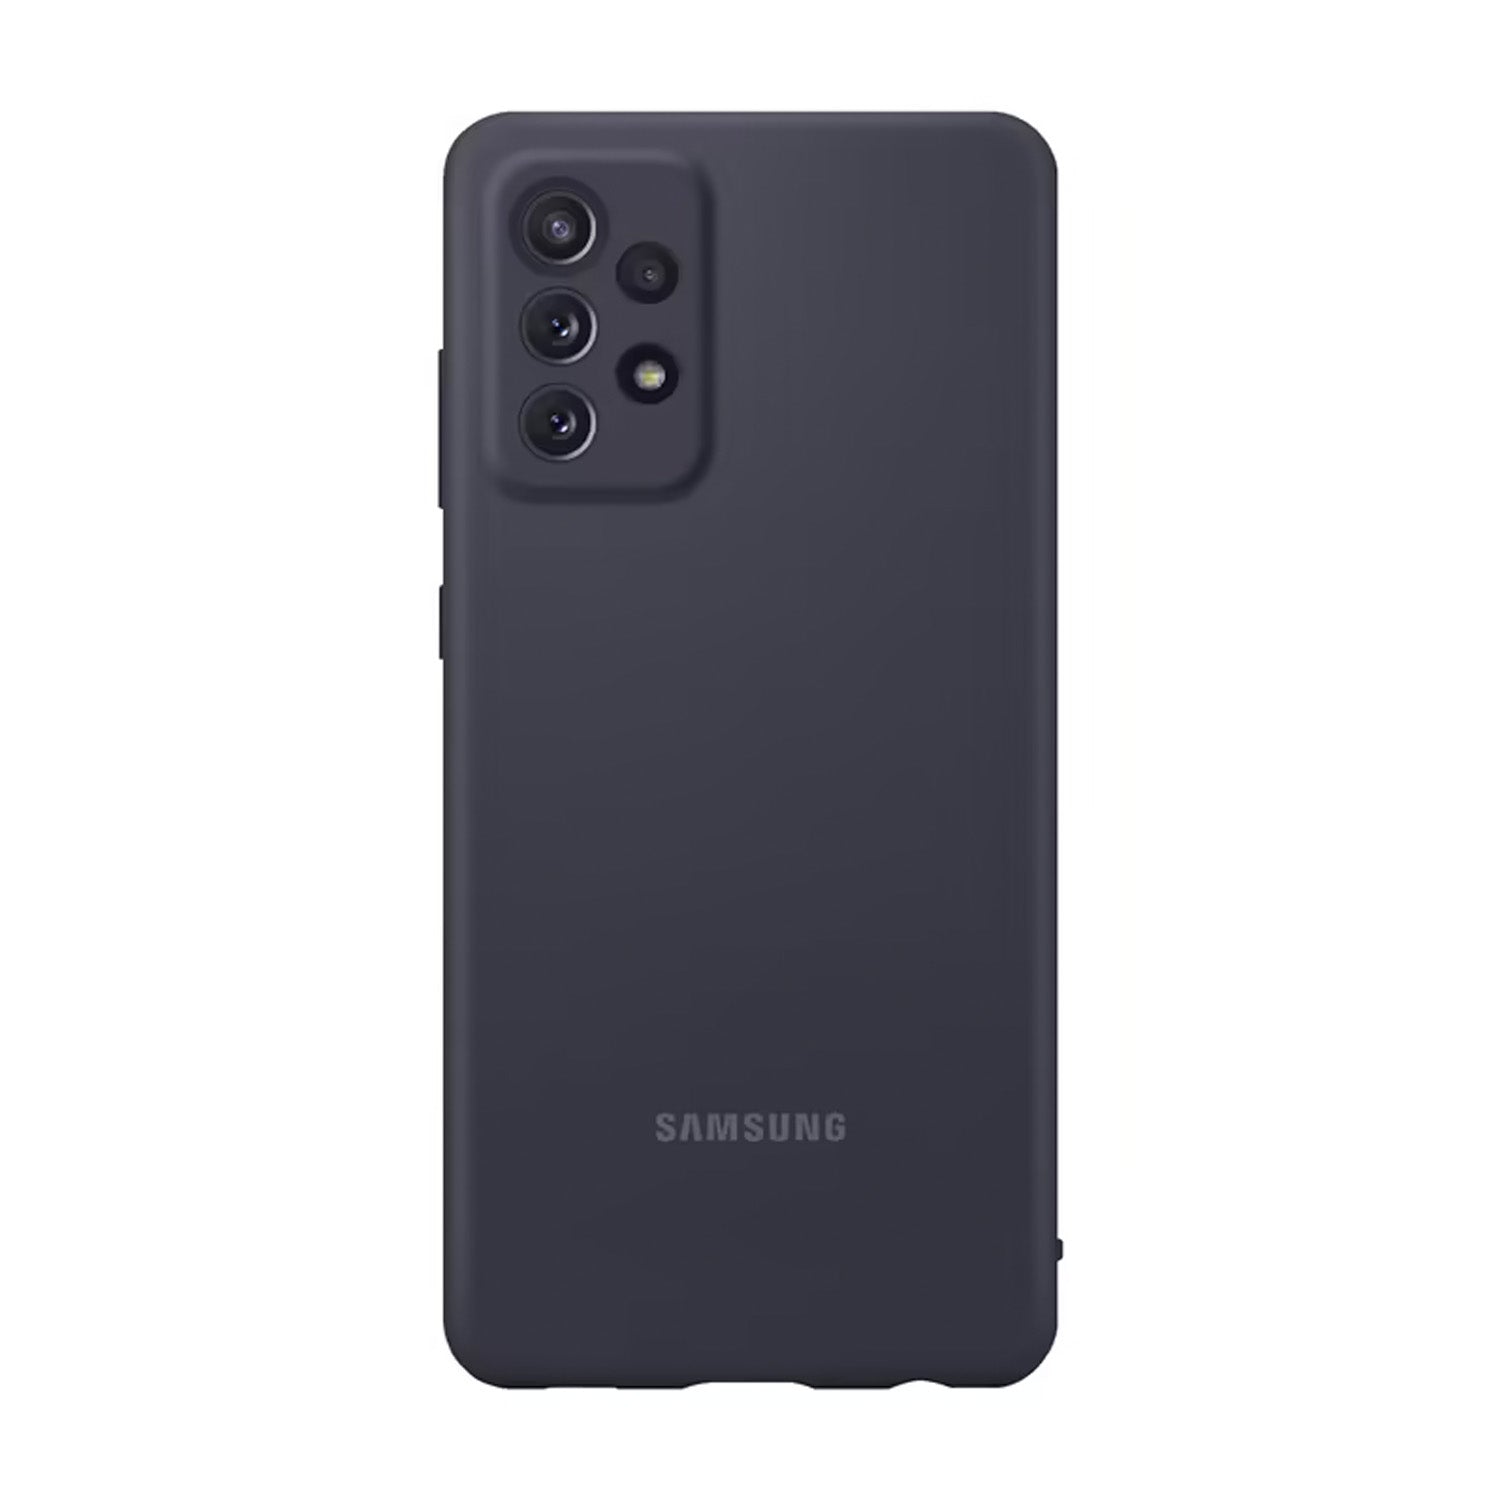 Samsung Galaxy A72 Silicone Cover Black